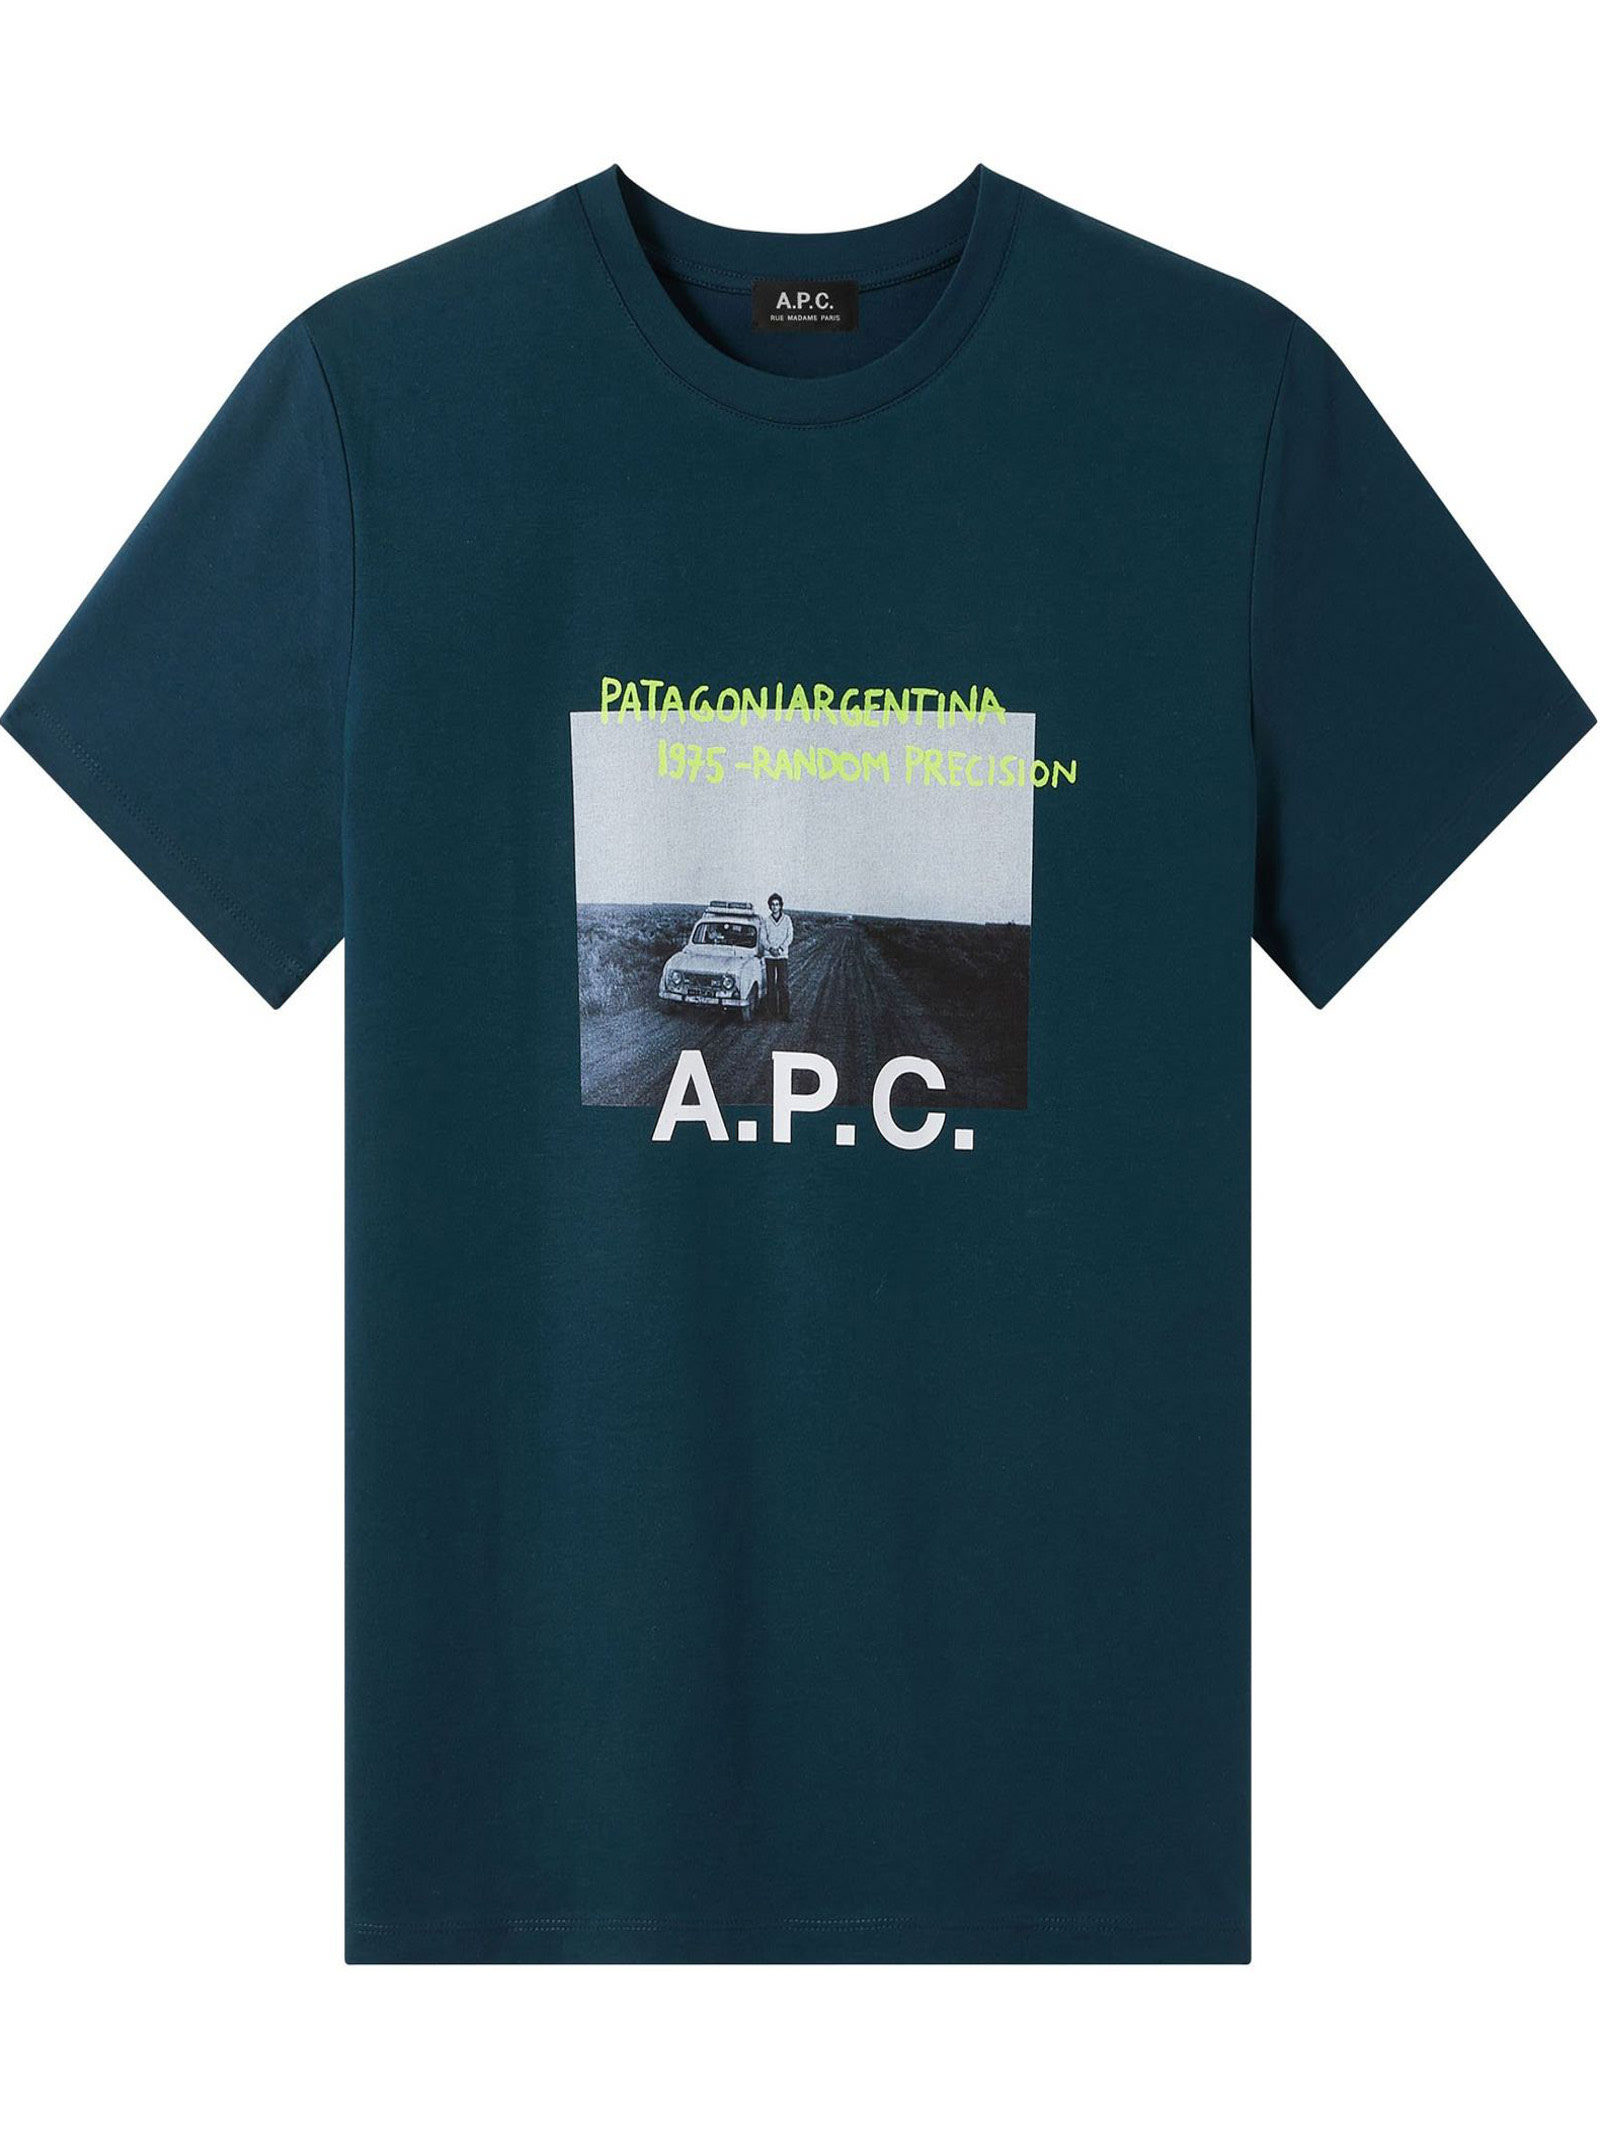 A.P.C. Green Cotton T-shirt